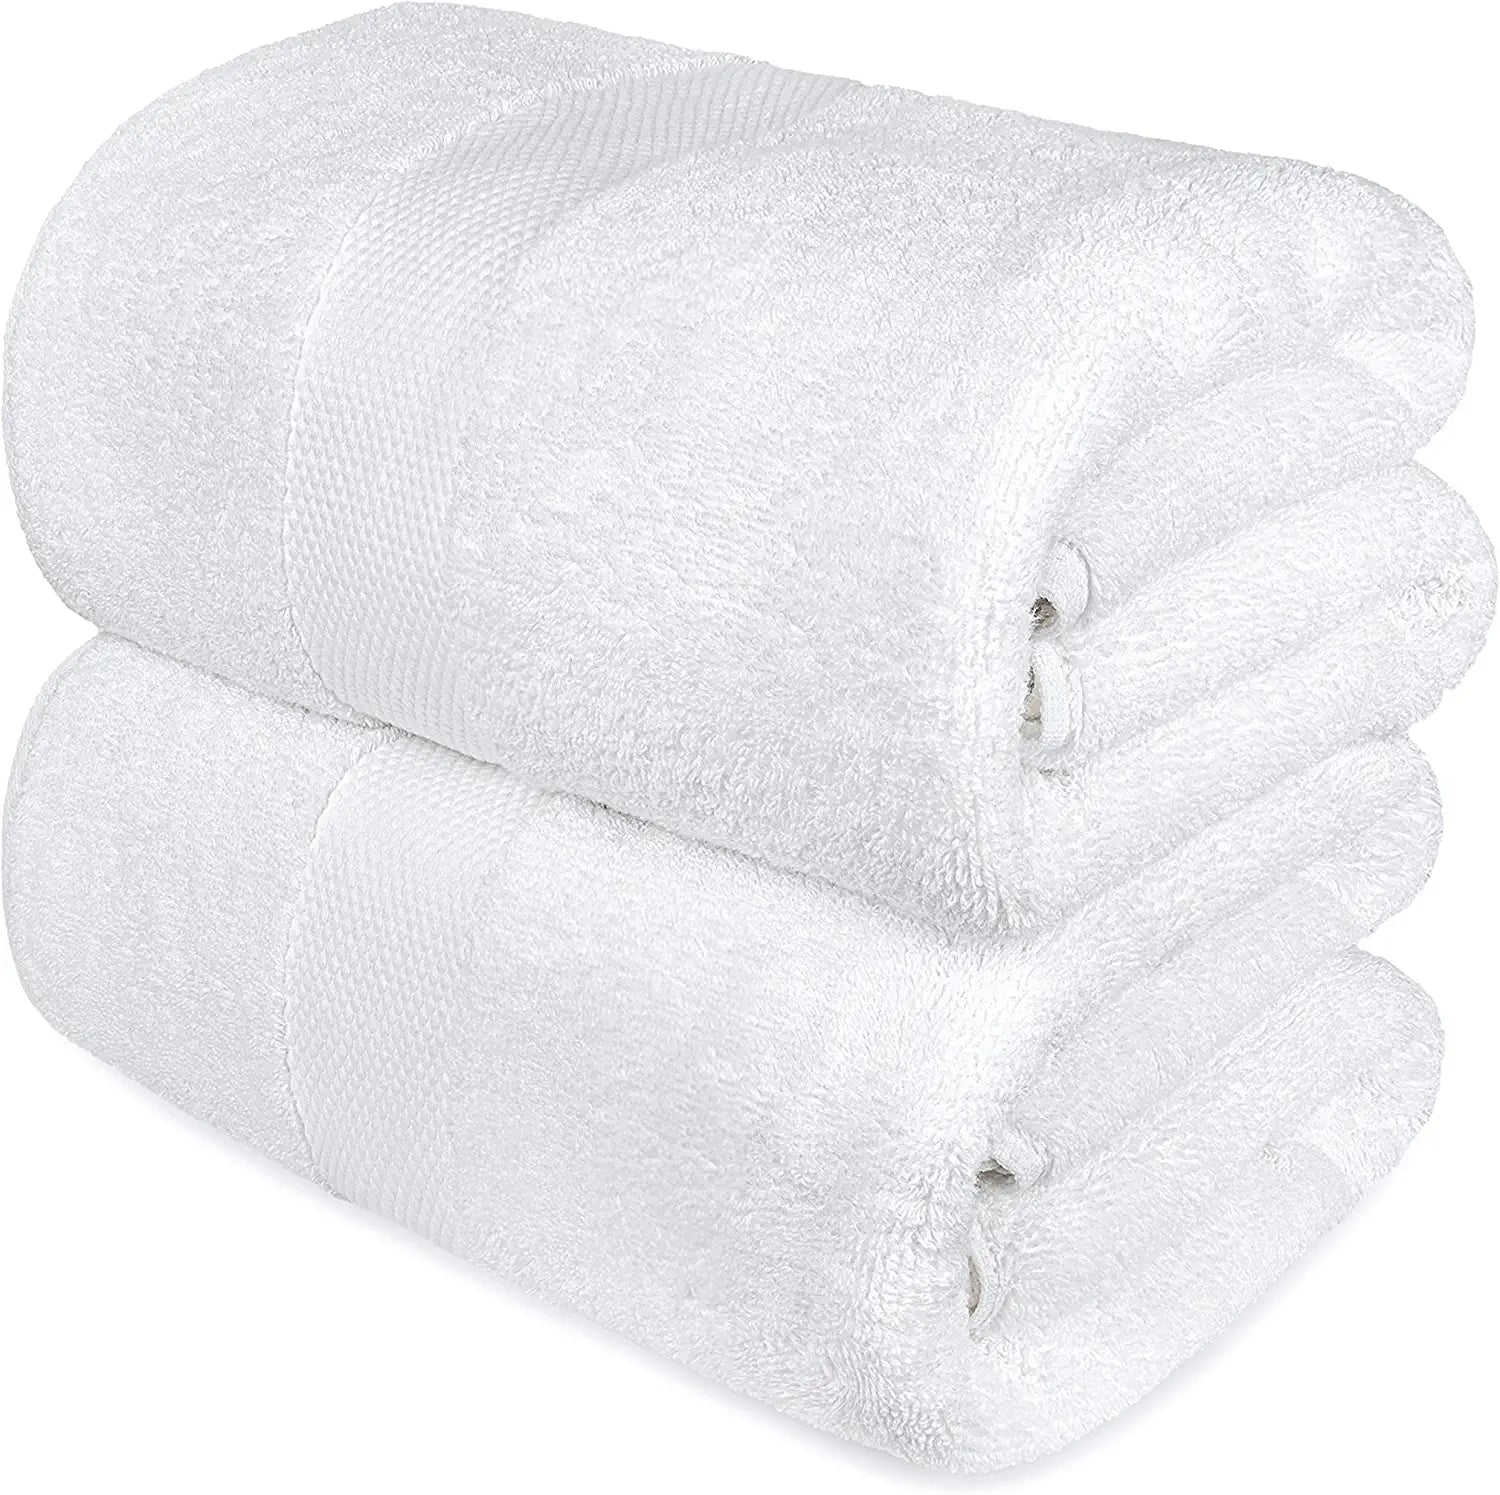 2piece White Bath Towel